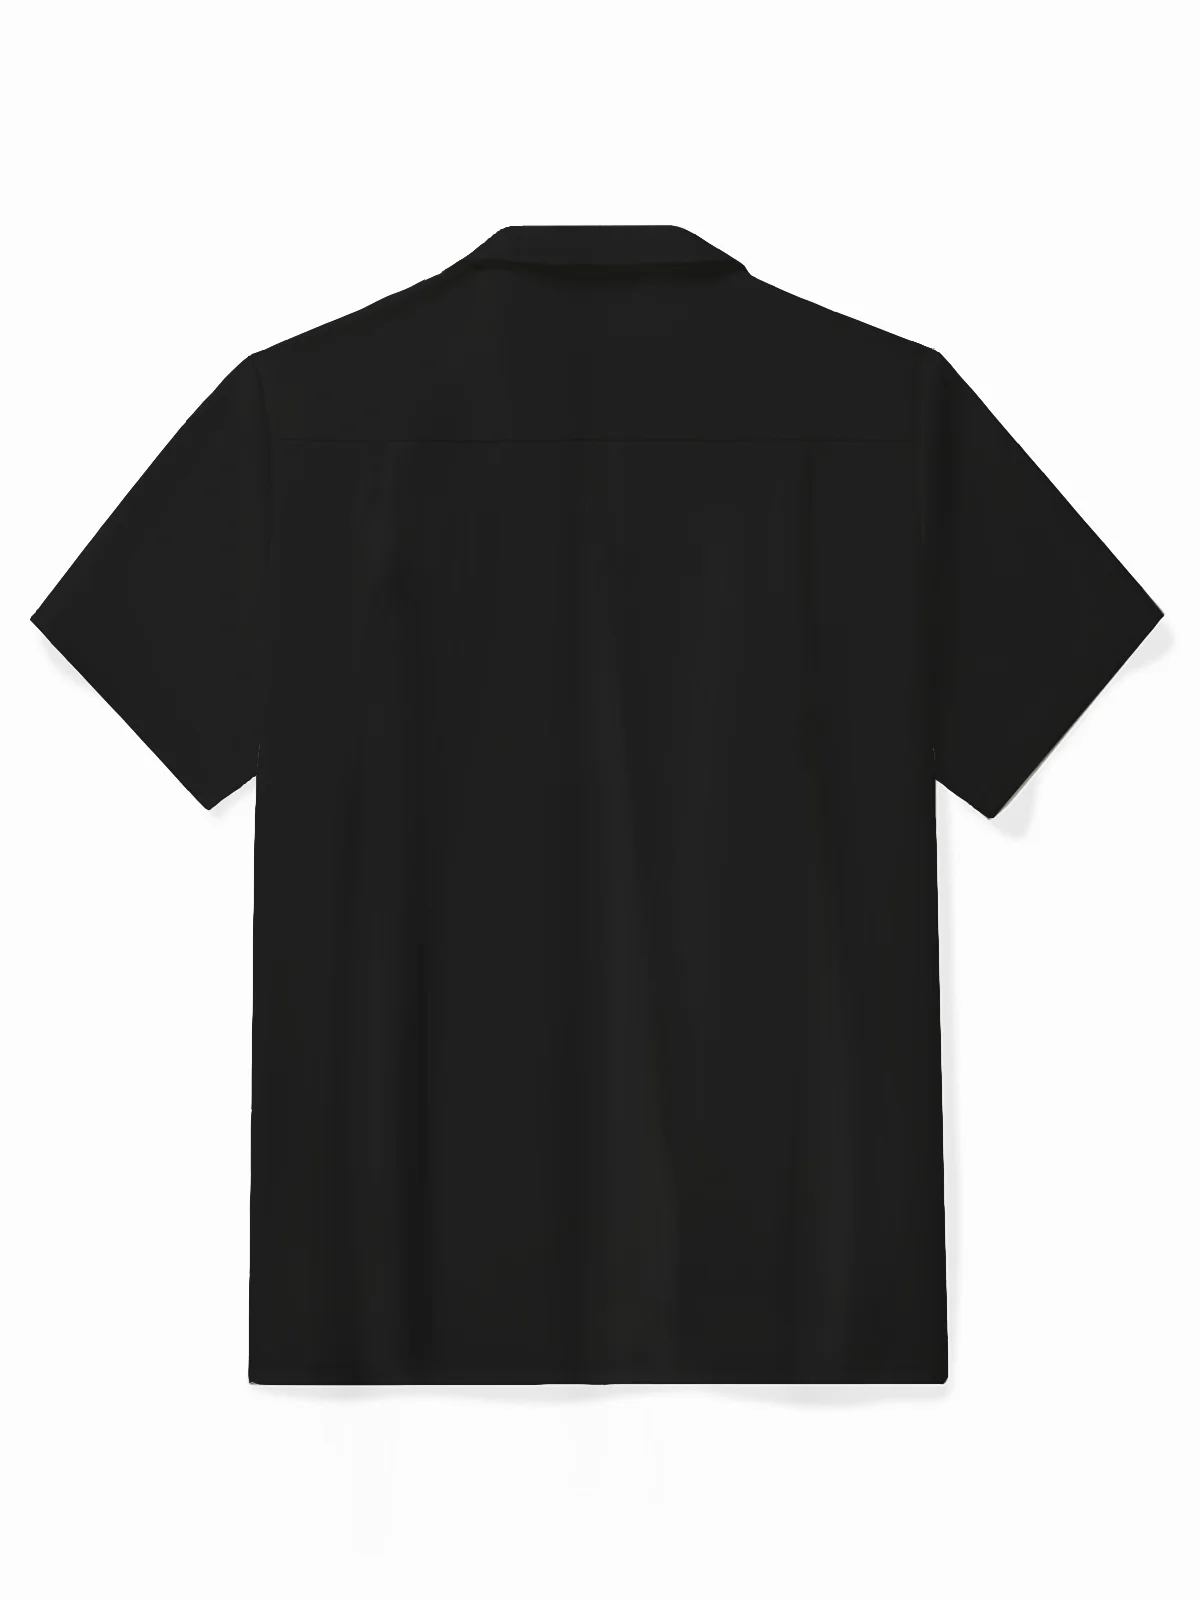 Royaura® Vintage Classic Car Black Men's Bowling Shirt Easy Care Camp Pocket Shirt Big Tall